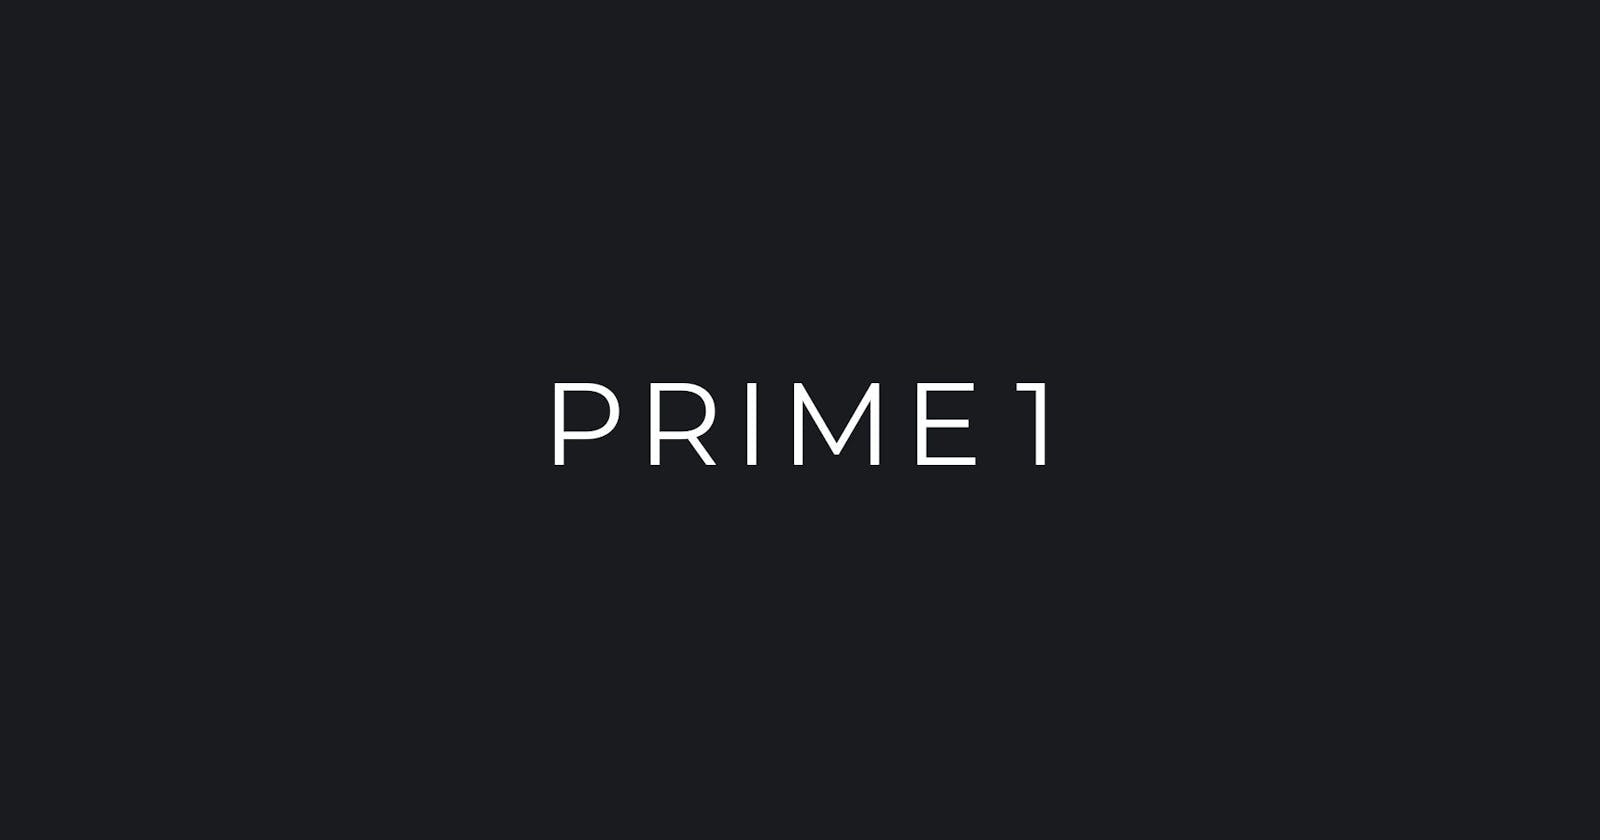 Prime 1 ~ VulnHub